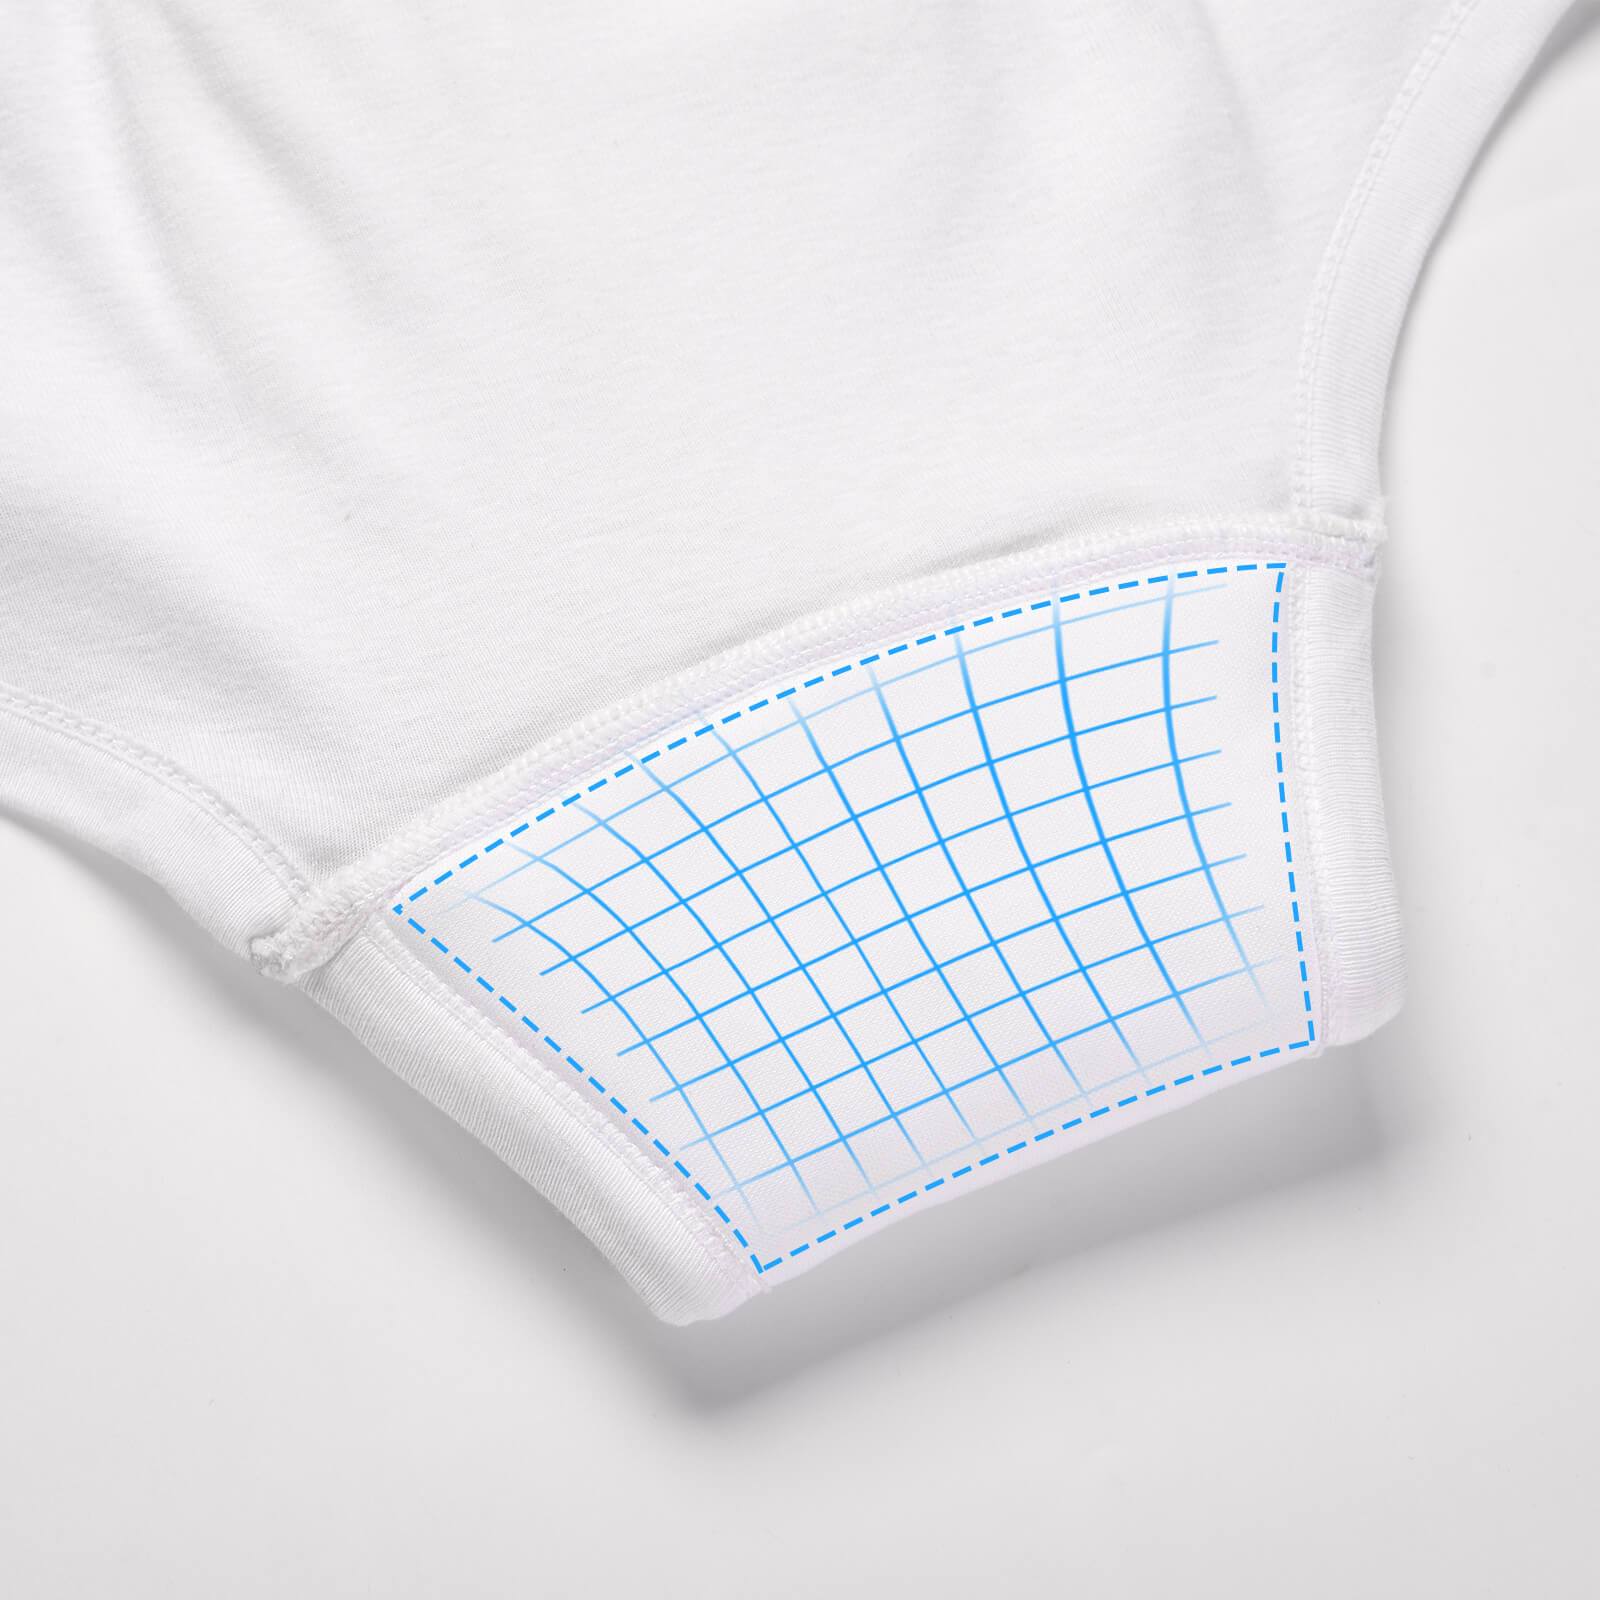 Petey's Washable Incontinence Underwear Briefs for Men, Moderate